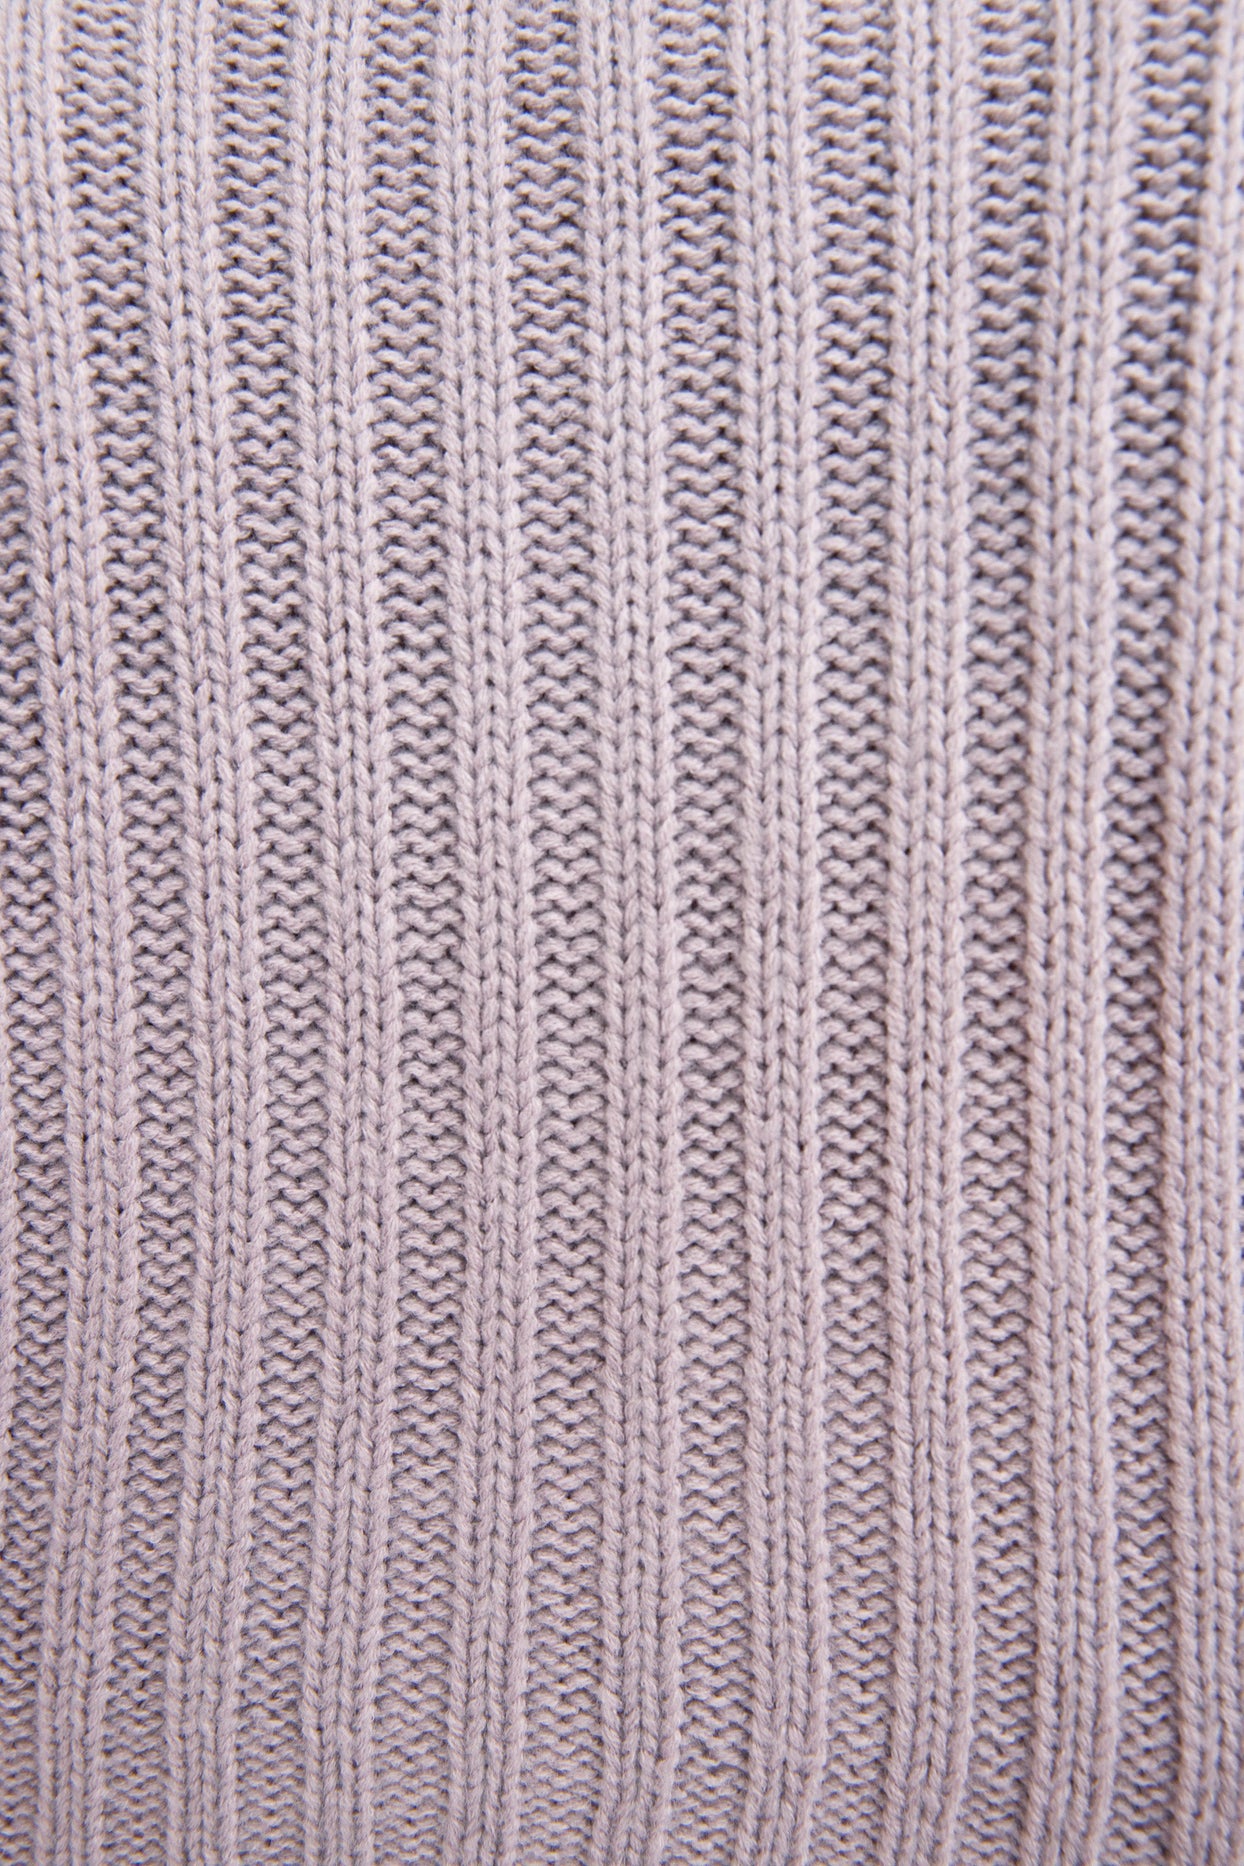 Oversized Chunky Knit Shrug in Dusty Lavender